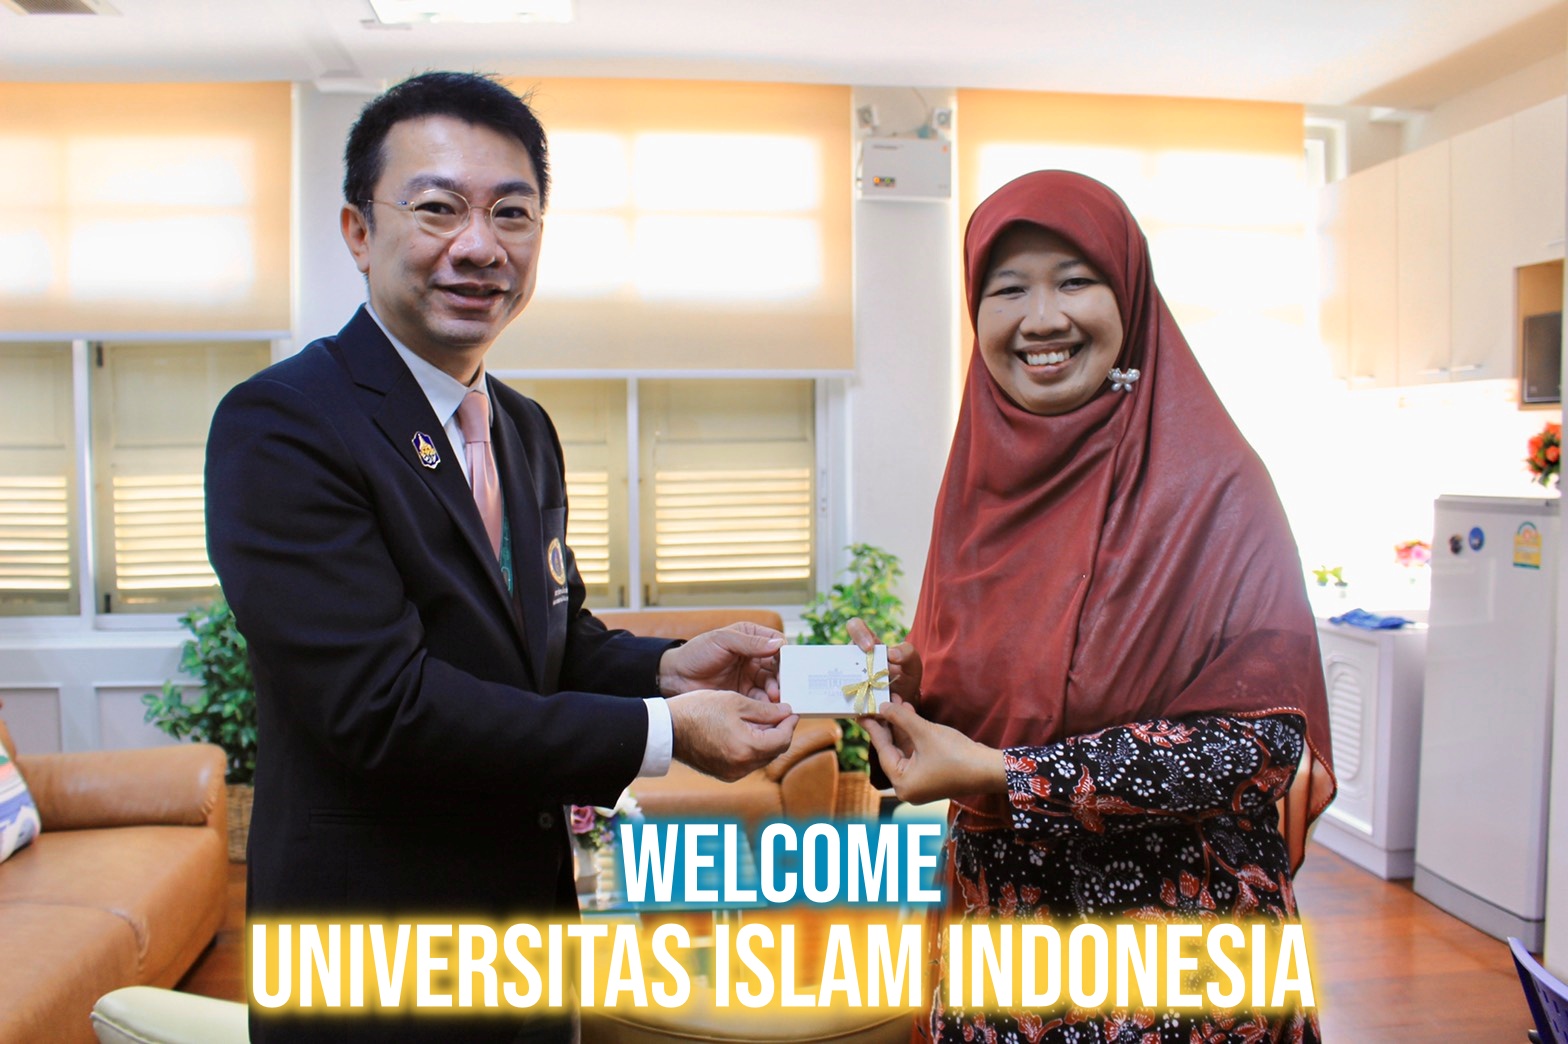 Universitas Islam Indonesia Visits Siriraj